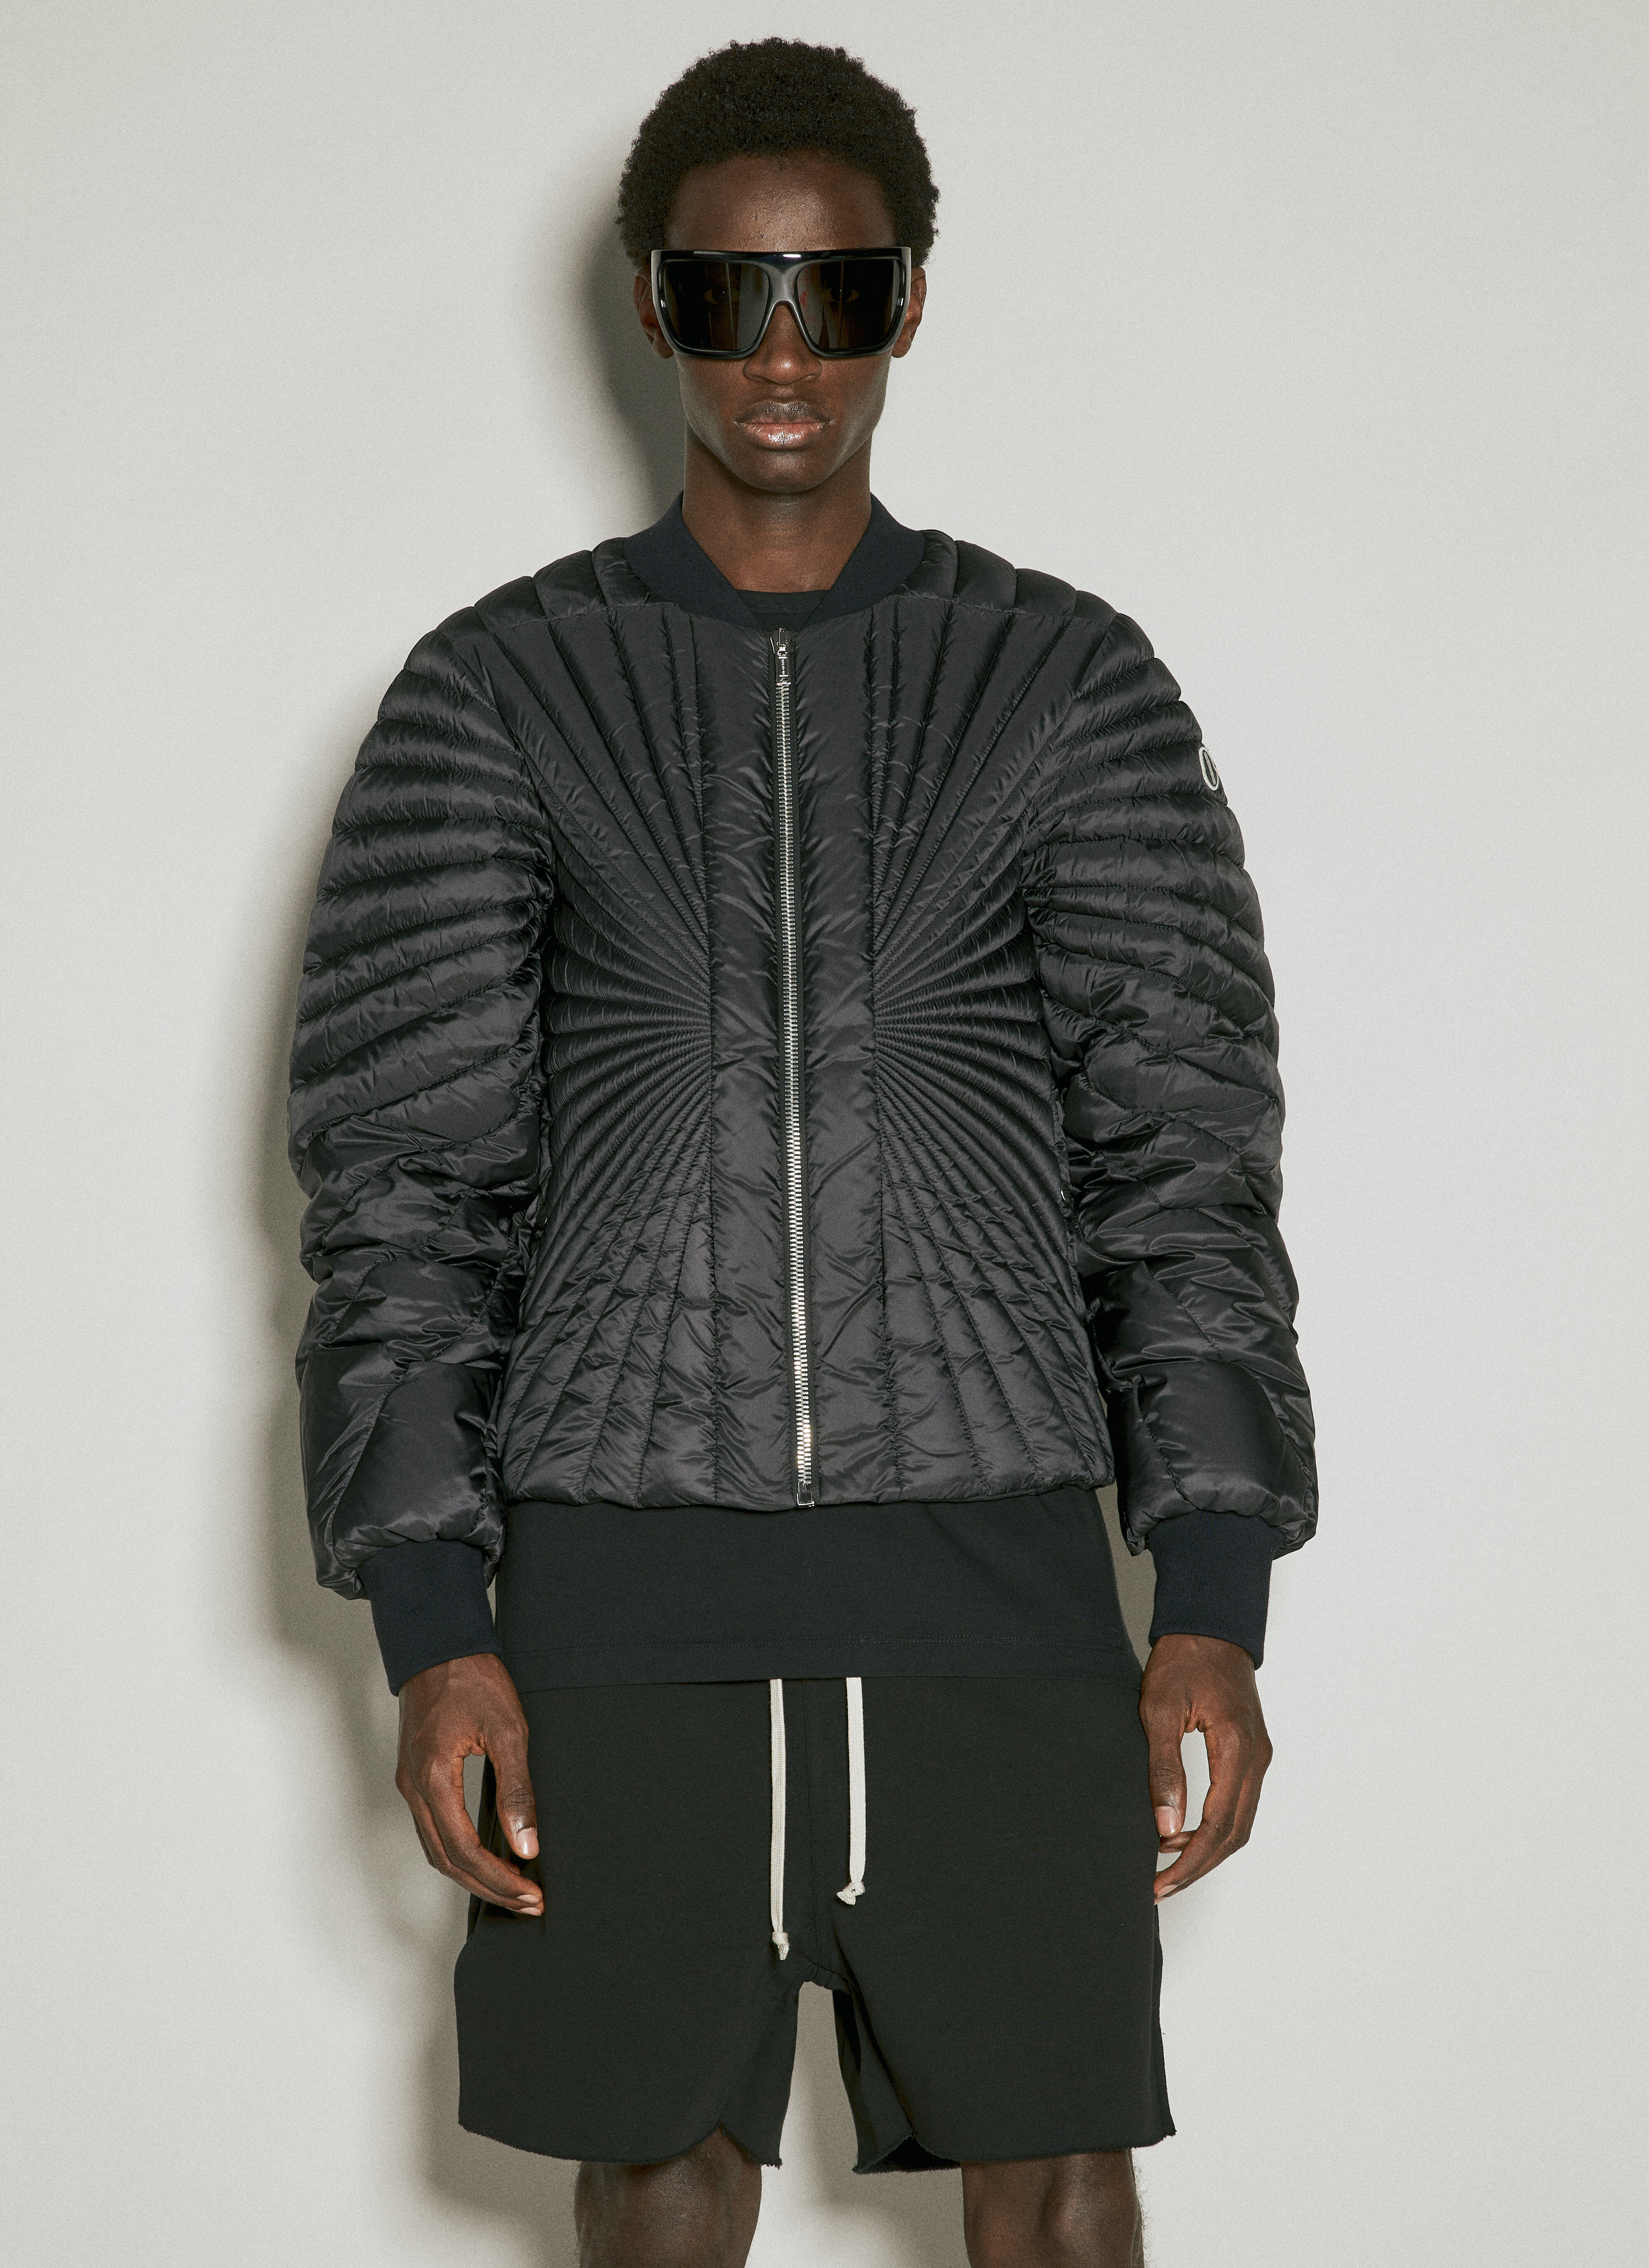 Moncler x Roc Nation designed by Jay-Z Radiance Down Flight Jacket Black mrn0156002